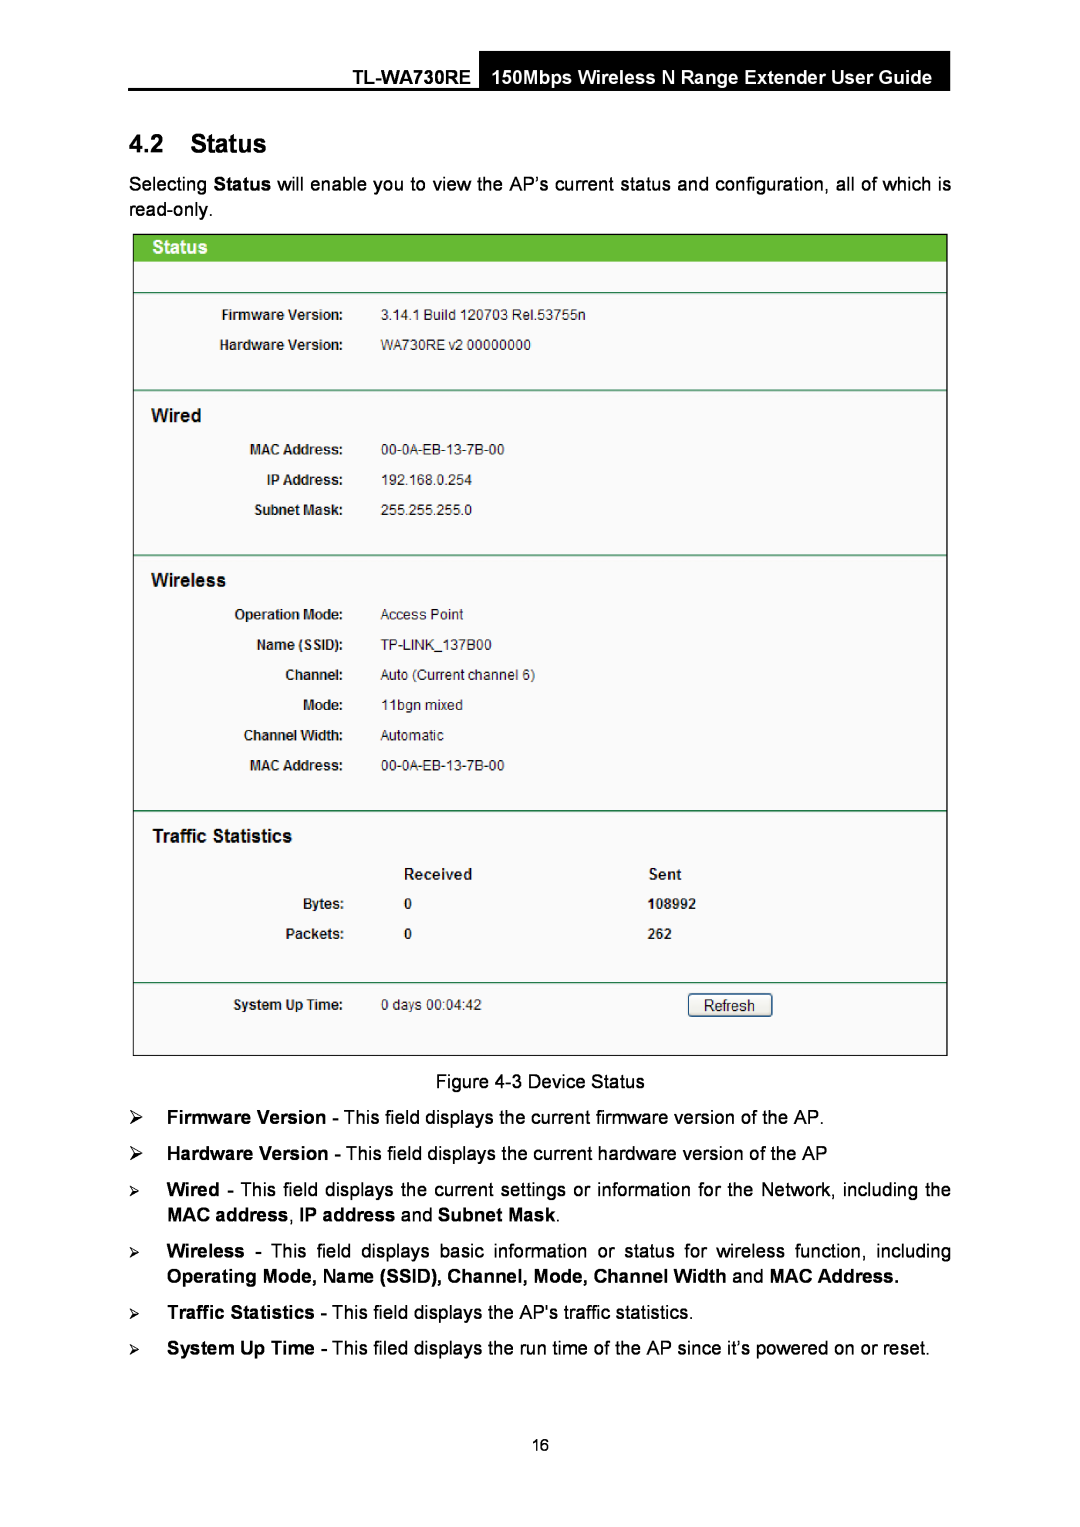 TP-Link manual Status, TL-WA730RE 150Mbps Wireless N Range Extender User Guide 